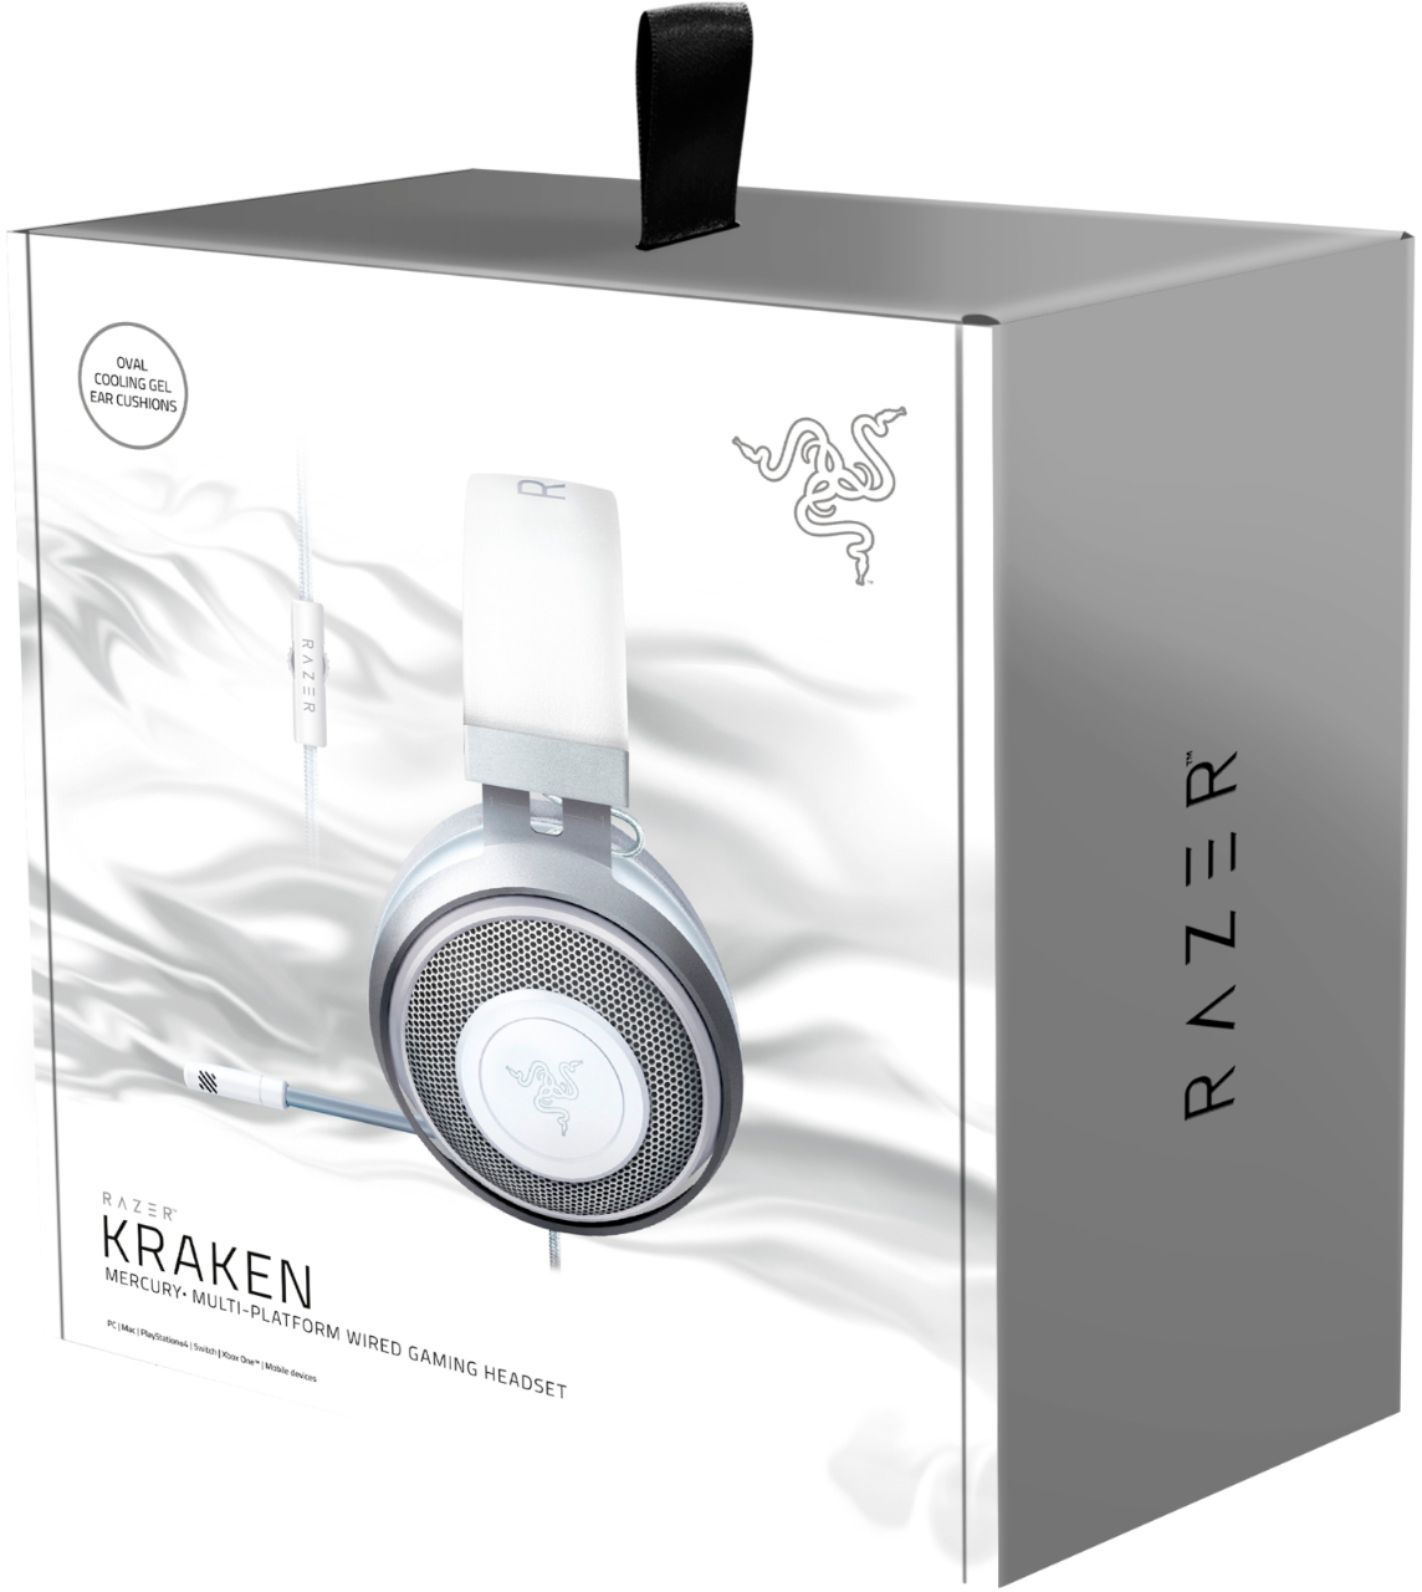 Buy Razer Kraken Gaming Headset Mercury White UP TO 59% OFF